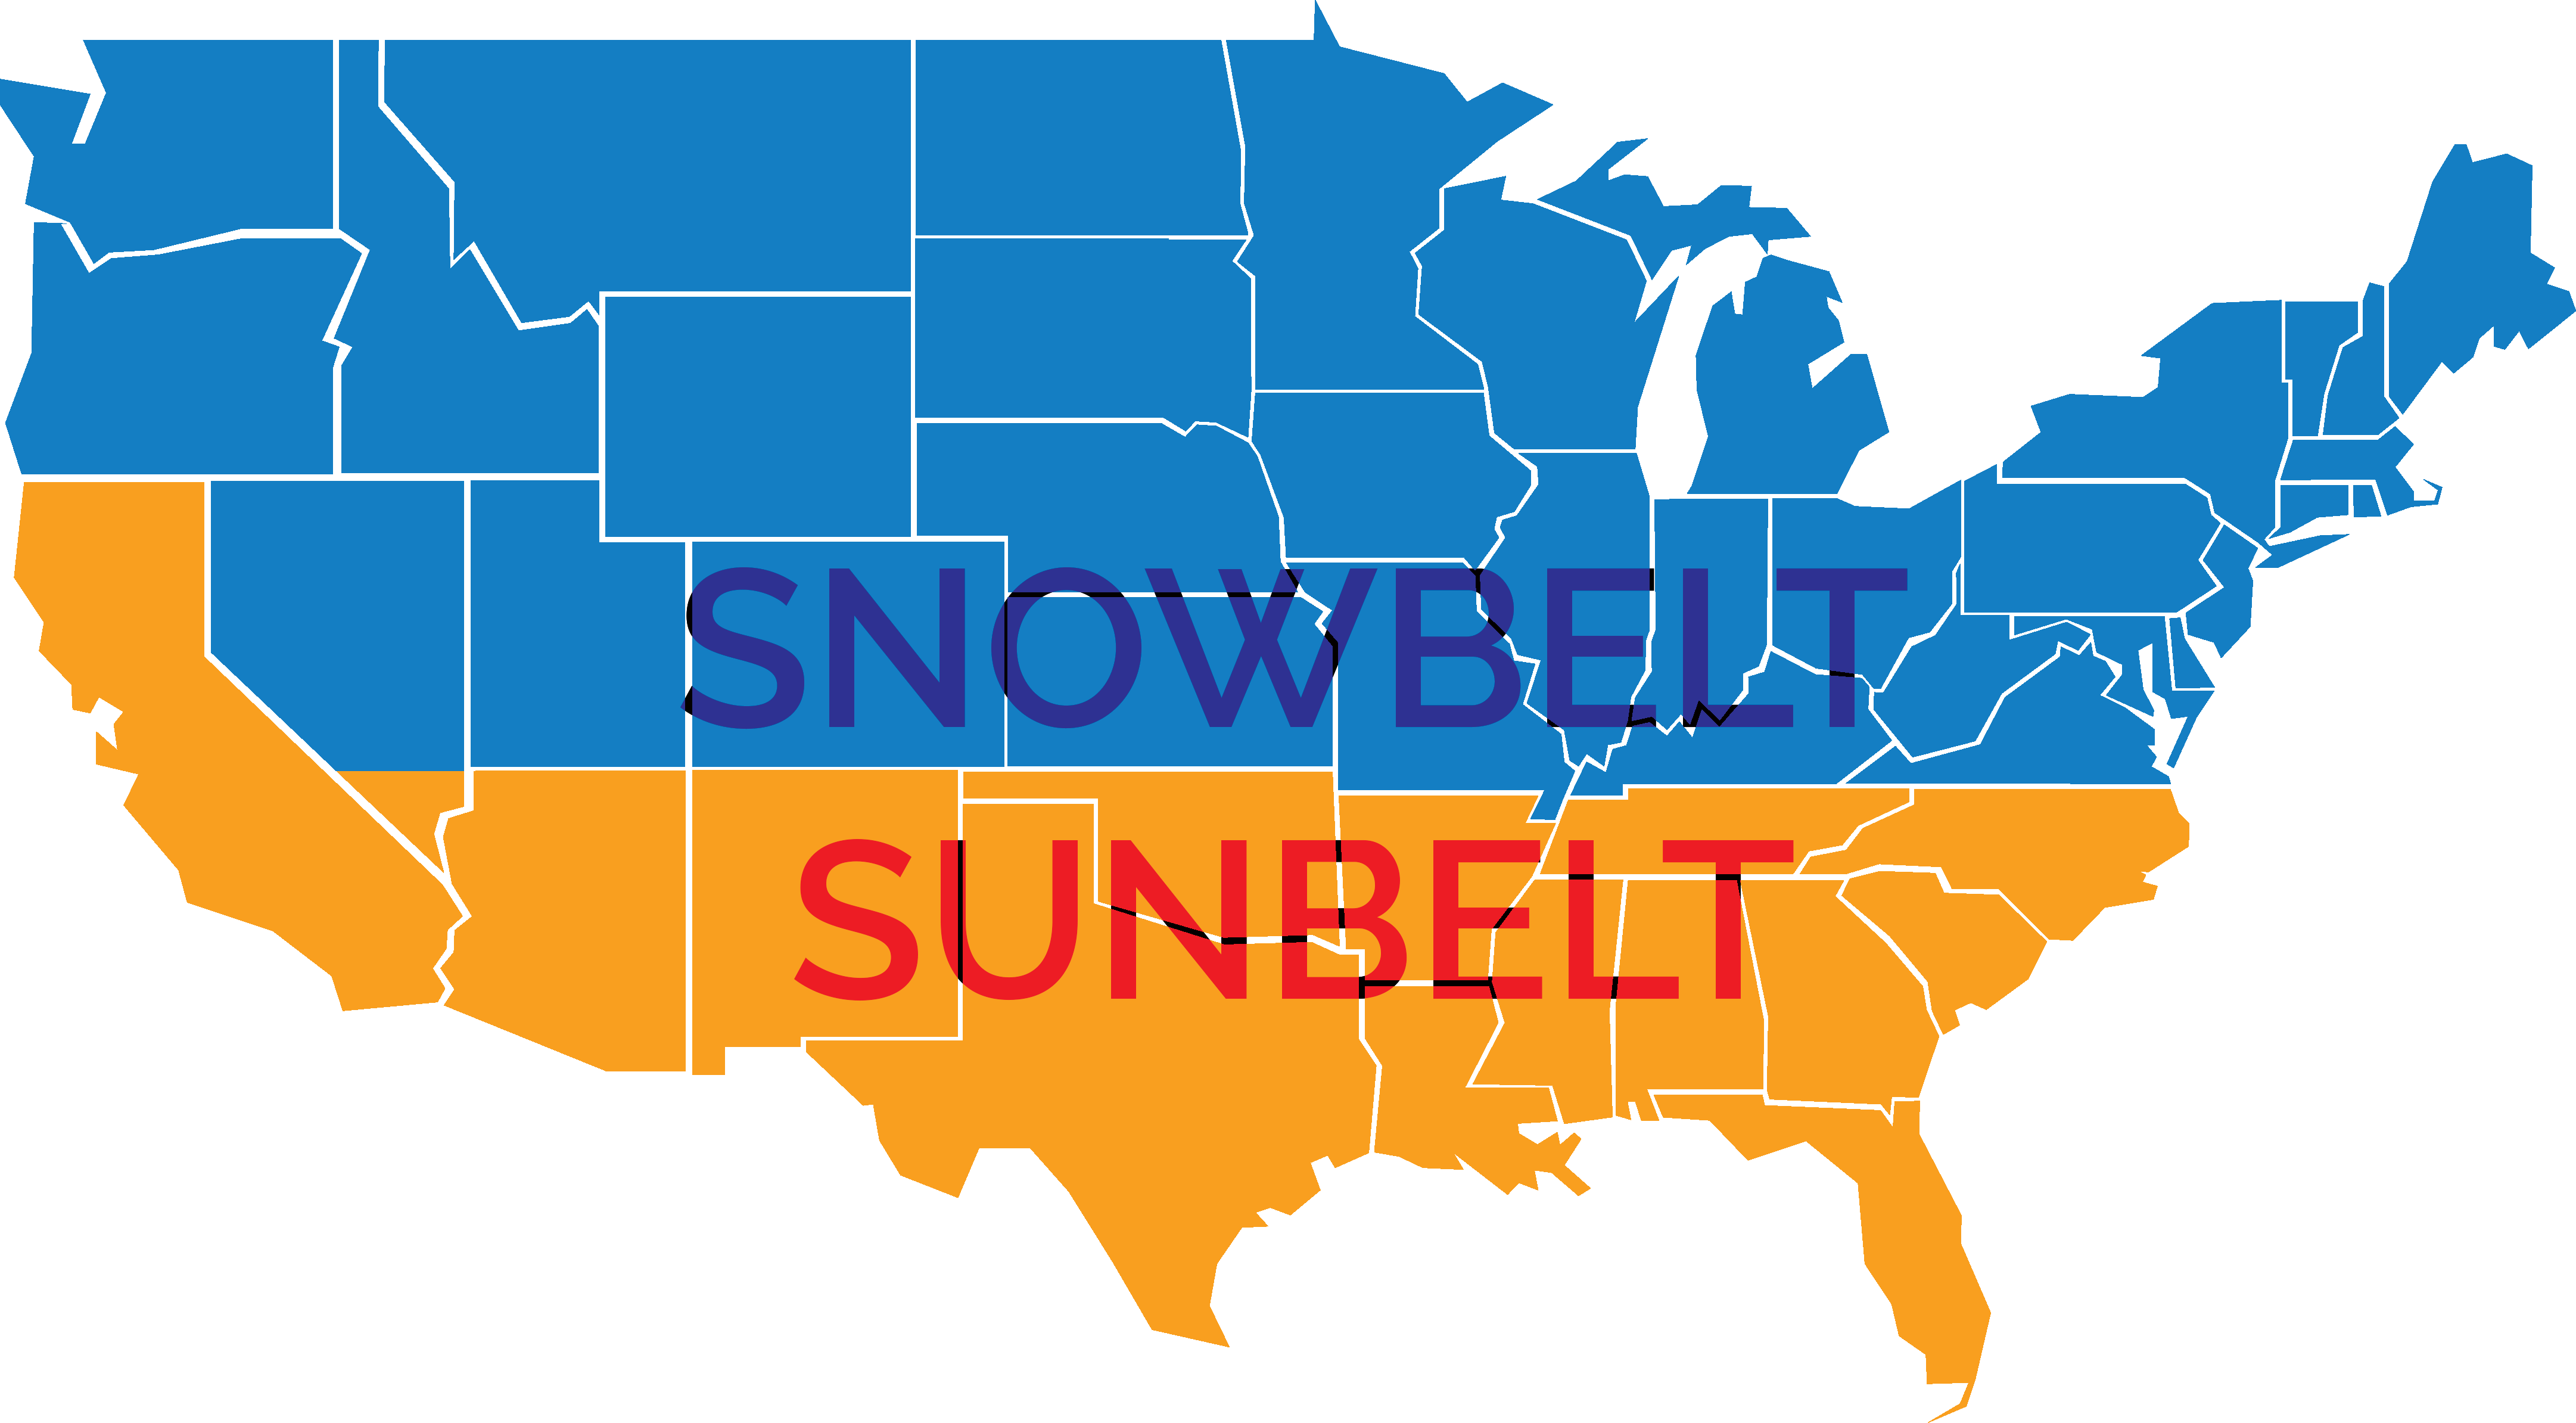 Sunbelt and Snowbelt